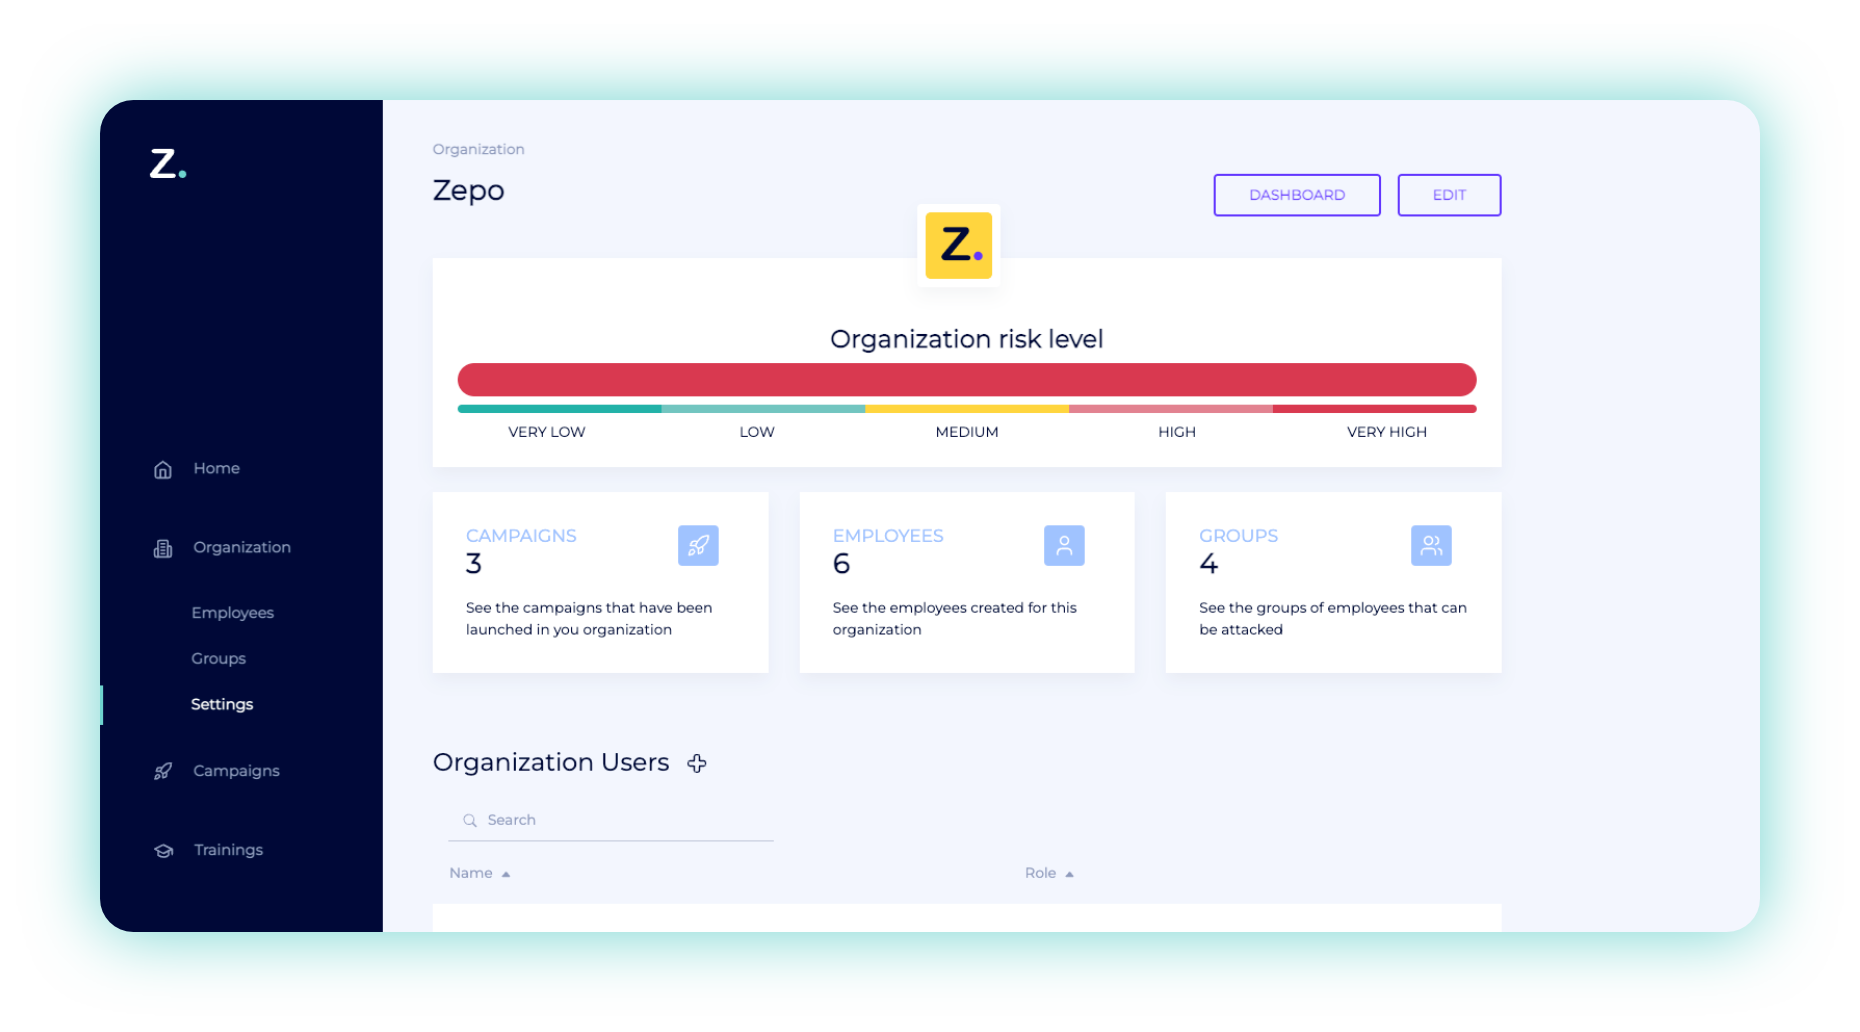 Zepo monitor organization risk level